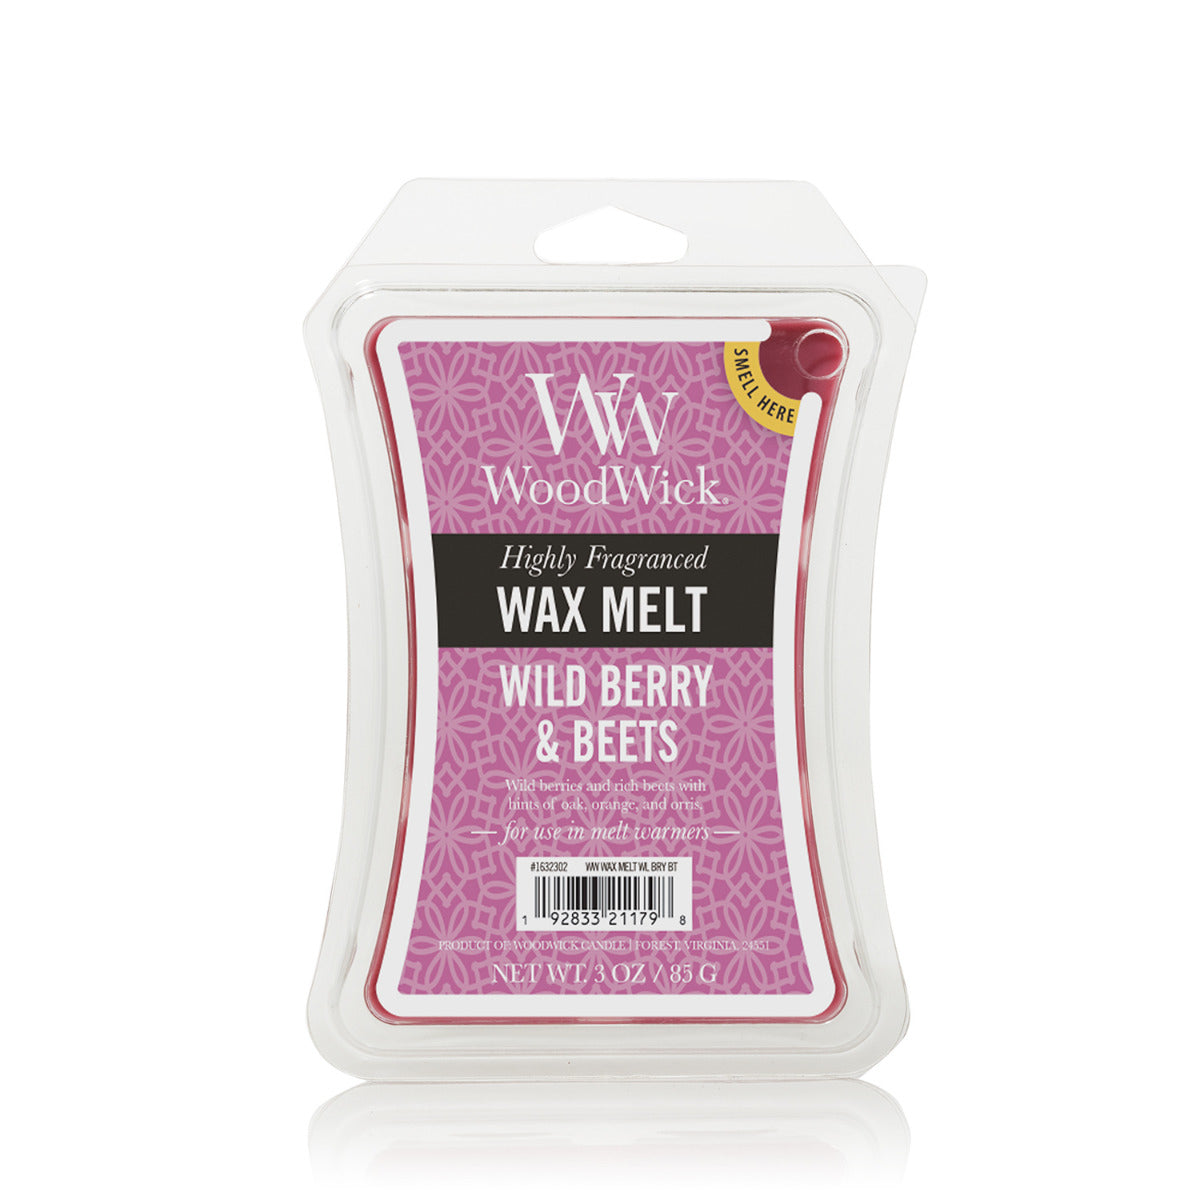 WoodWick Wild Berry & Beets Wax Melt